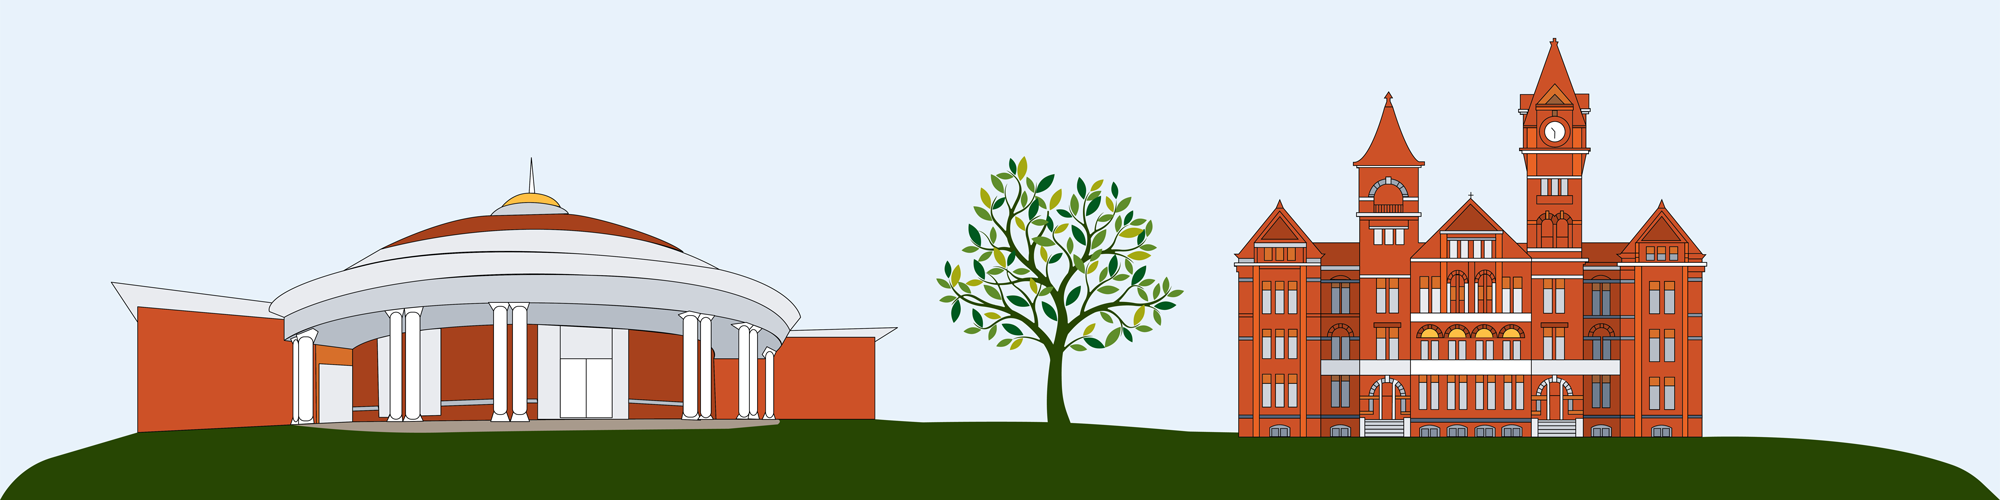 Illustration depiction Auburn University and Tuskegee partnership